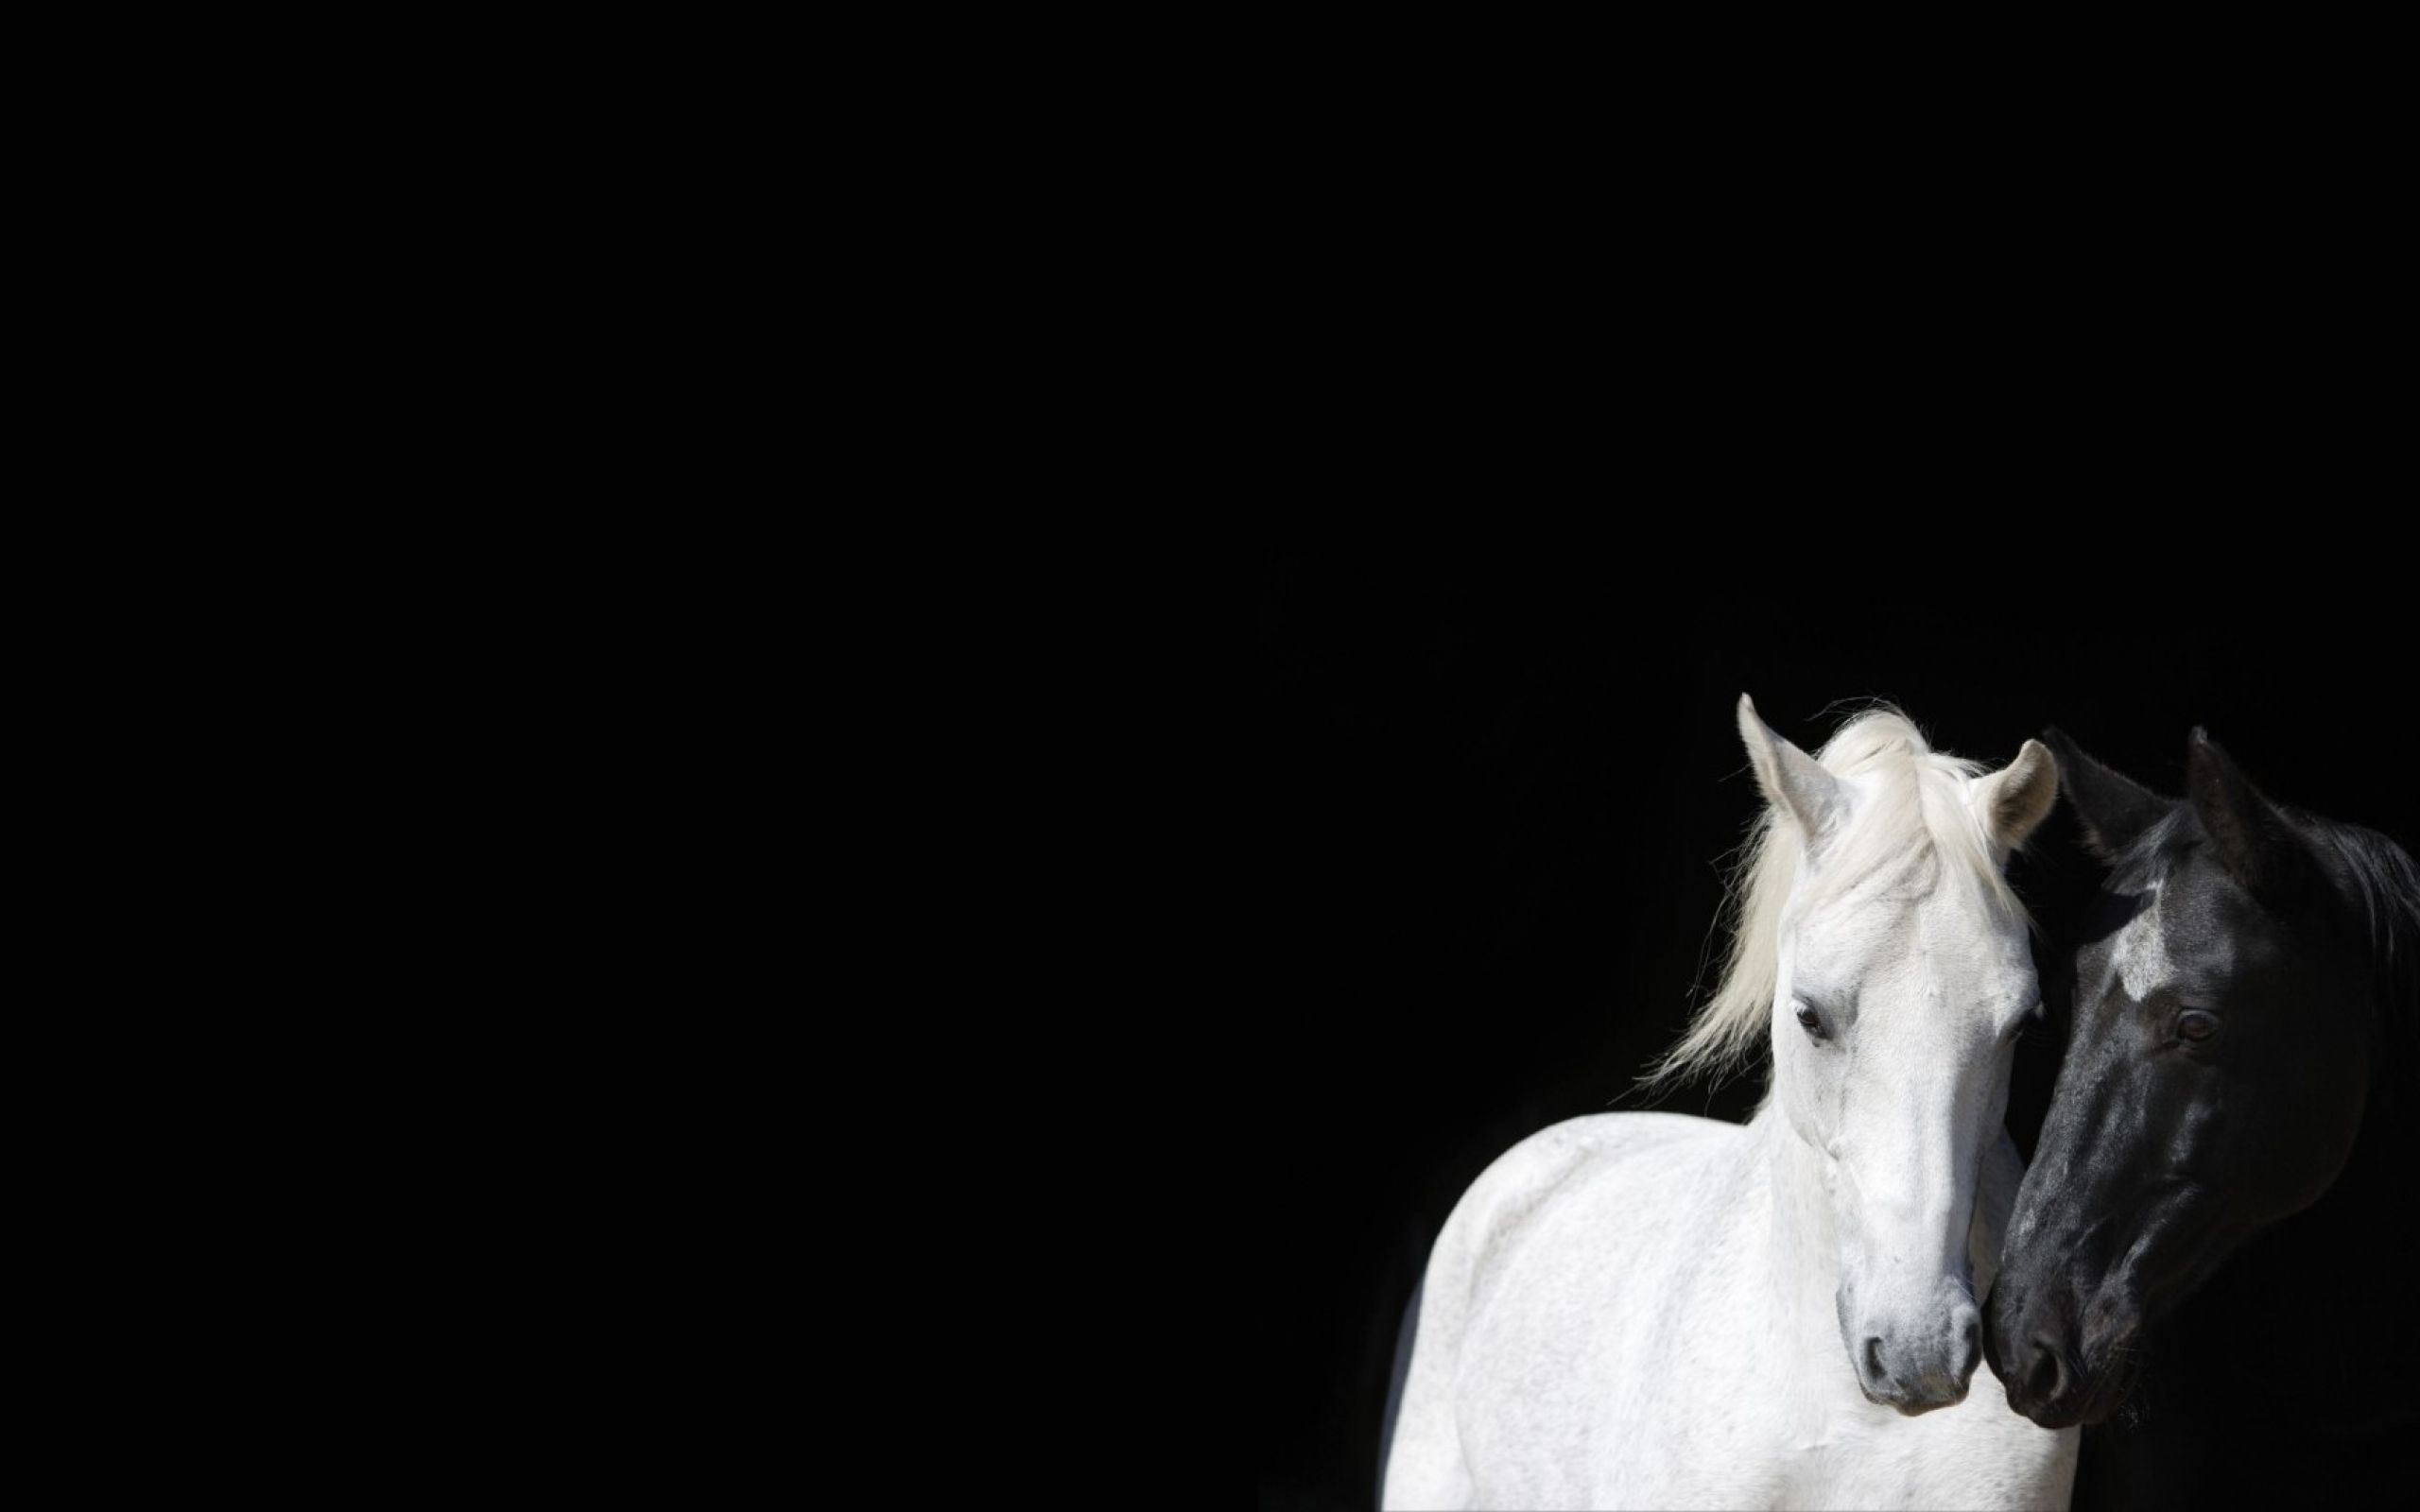 Black and White Horse Wallpaper. Horse wallpaper, Horses, Horse photo